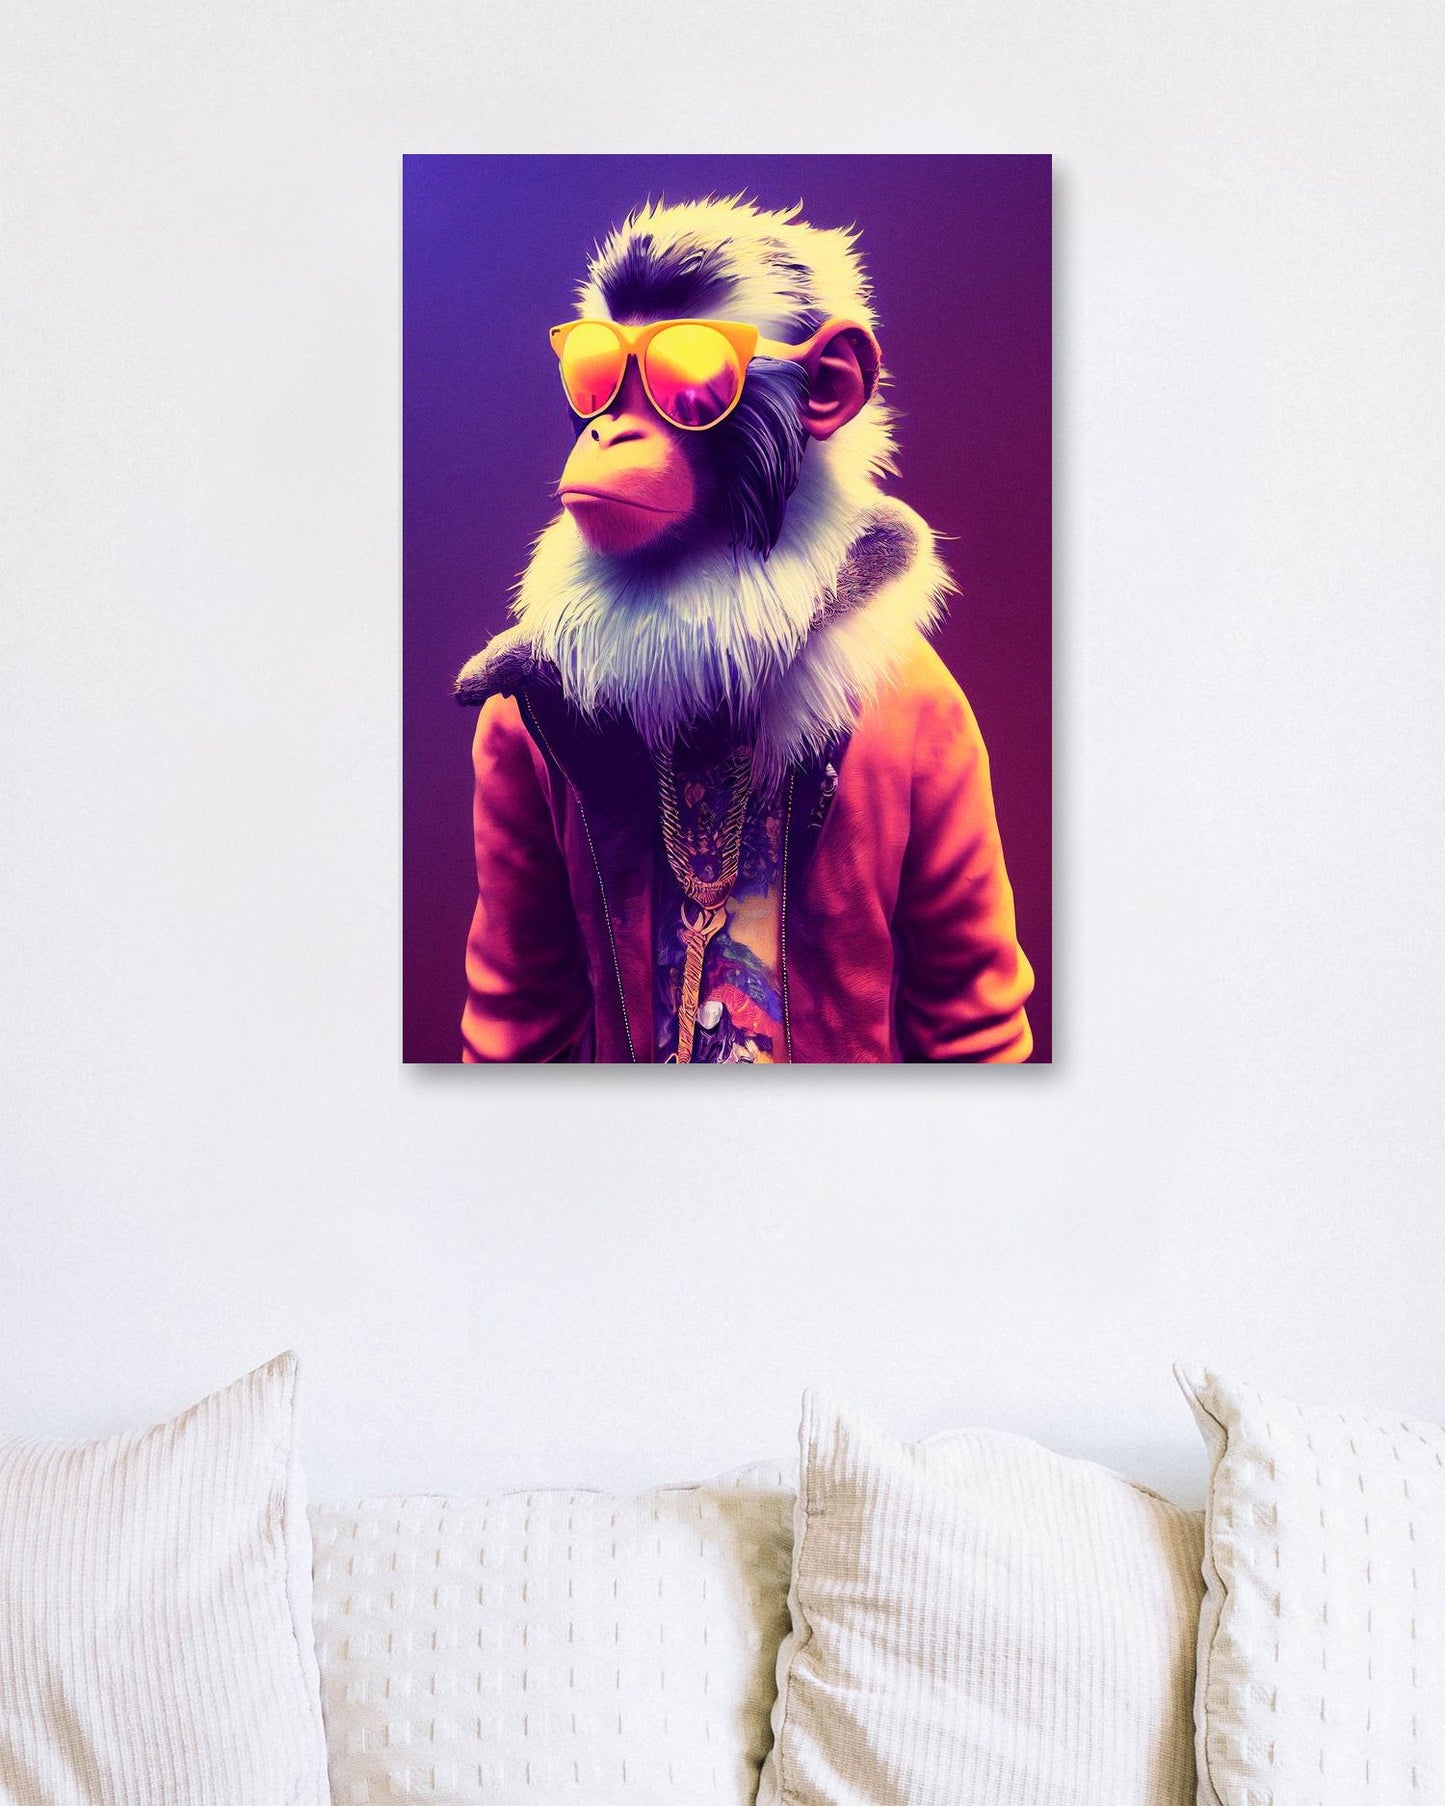 Cool monkey portrait - @Artnesia